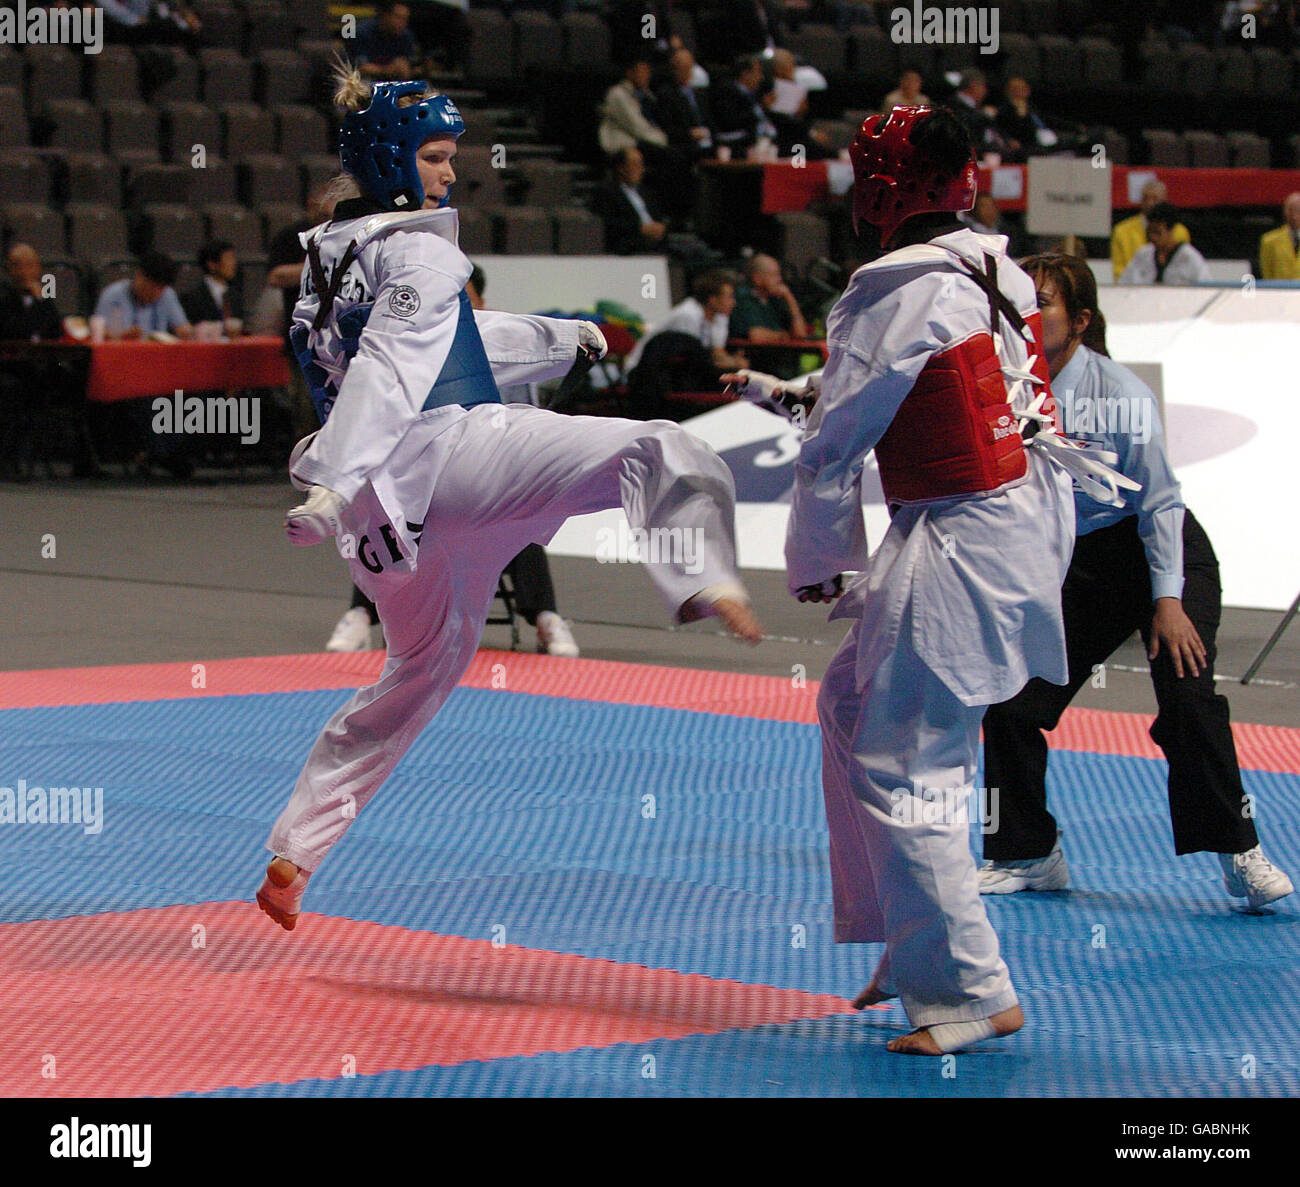 Atletica - 2007 World Taekwondo Bejing Olympic Qualification - MEN Arena. germania Helena Fromm (blu) in azione contro il Marocco Benabderrassoul Mouna Foto Stock